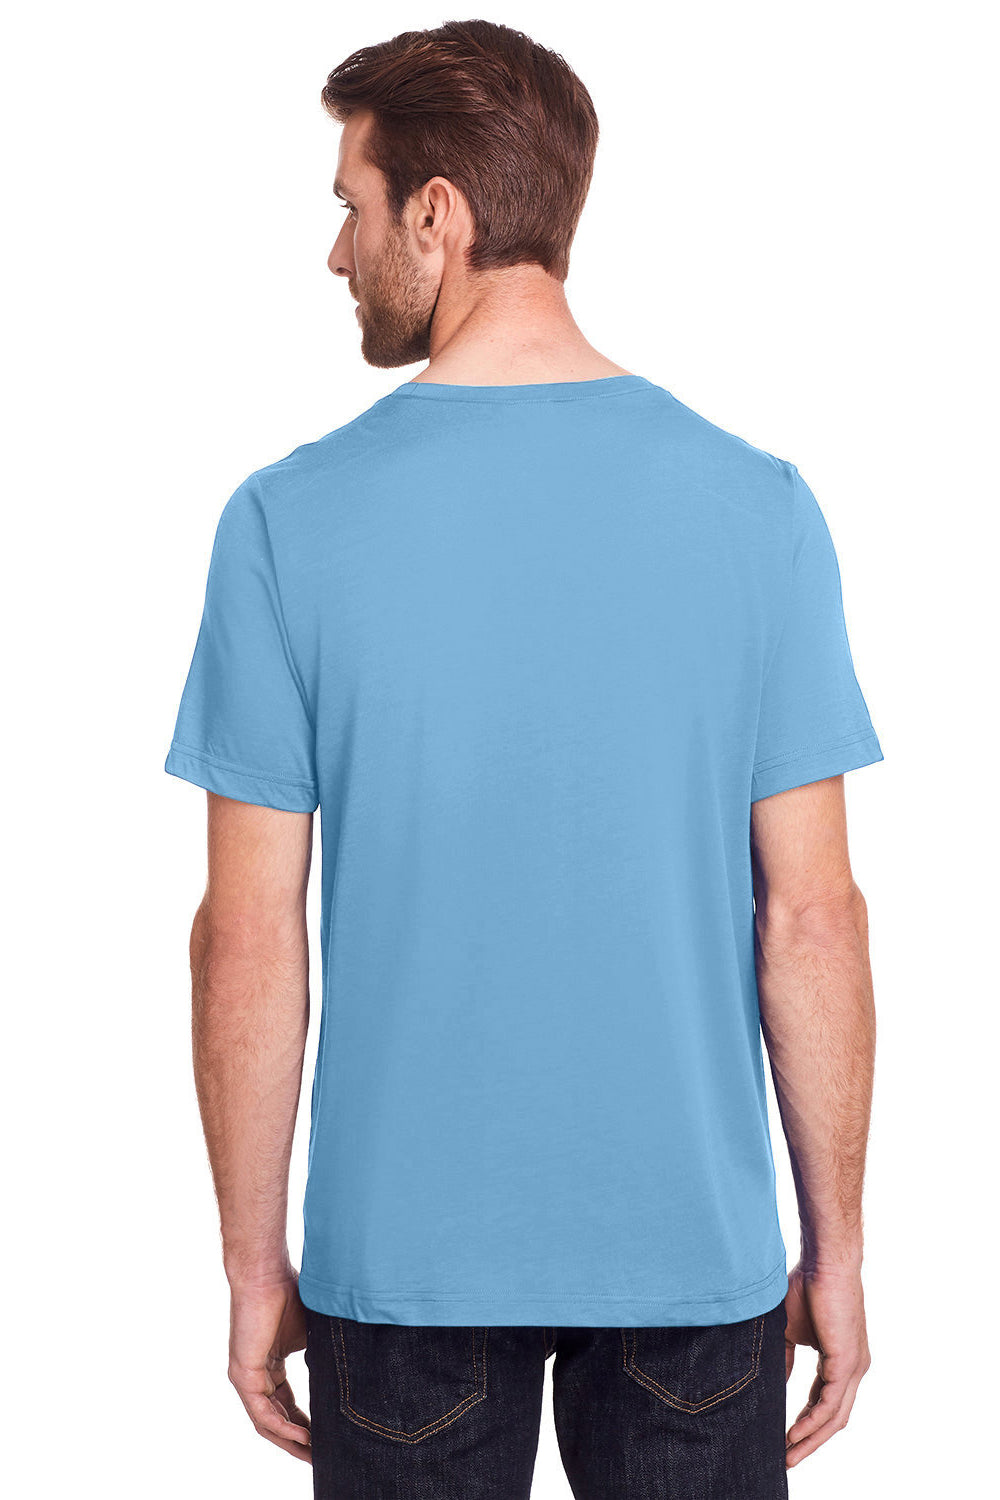 Core 365 CE111 Mens Fusion ChromaSoft Performance Moisture Wicking Short Sleeve Crewneck T-Shirt Columbia Blue Back